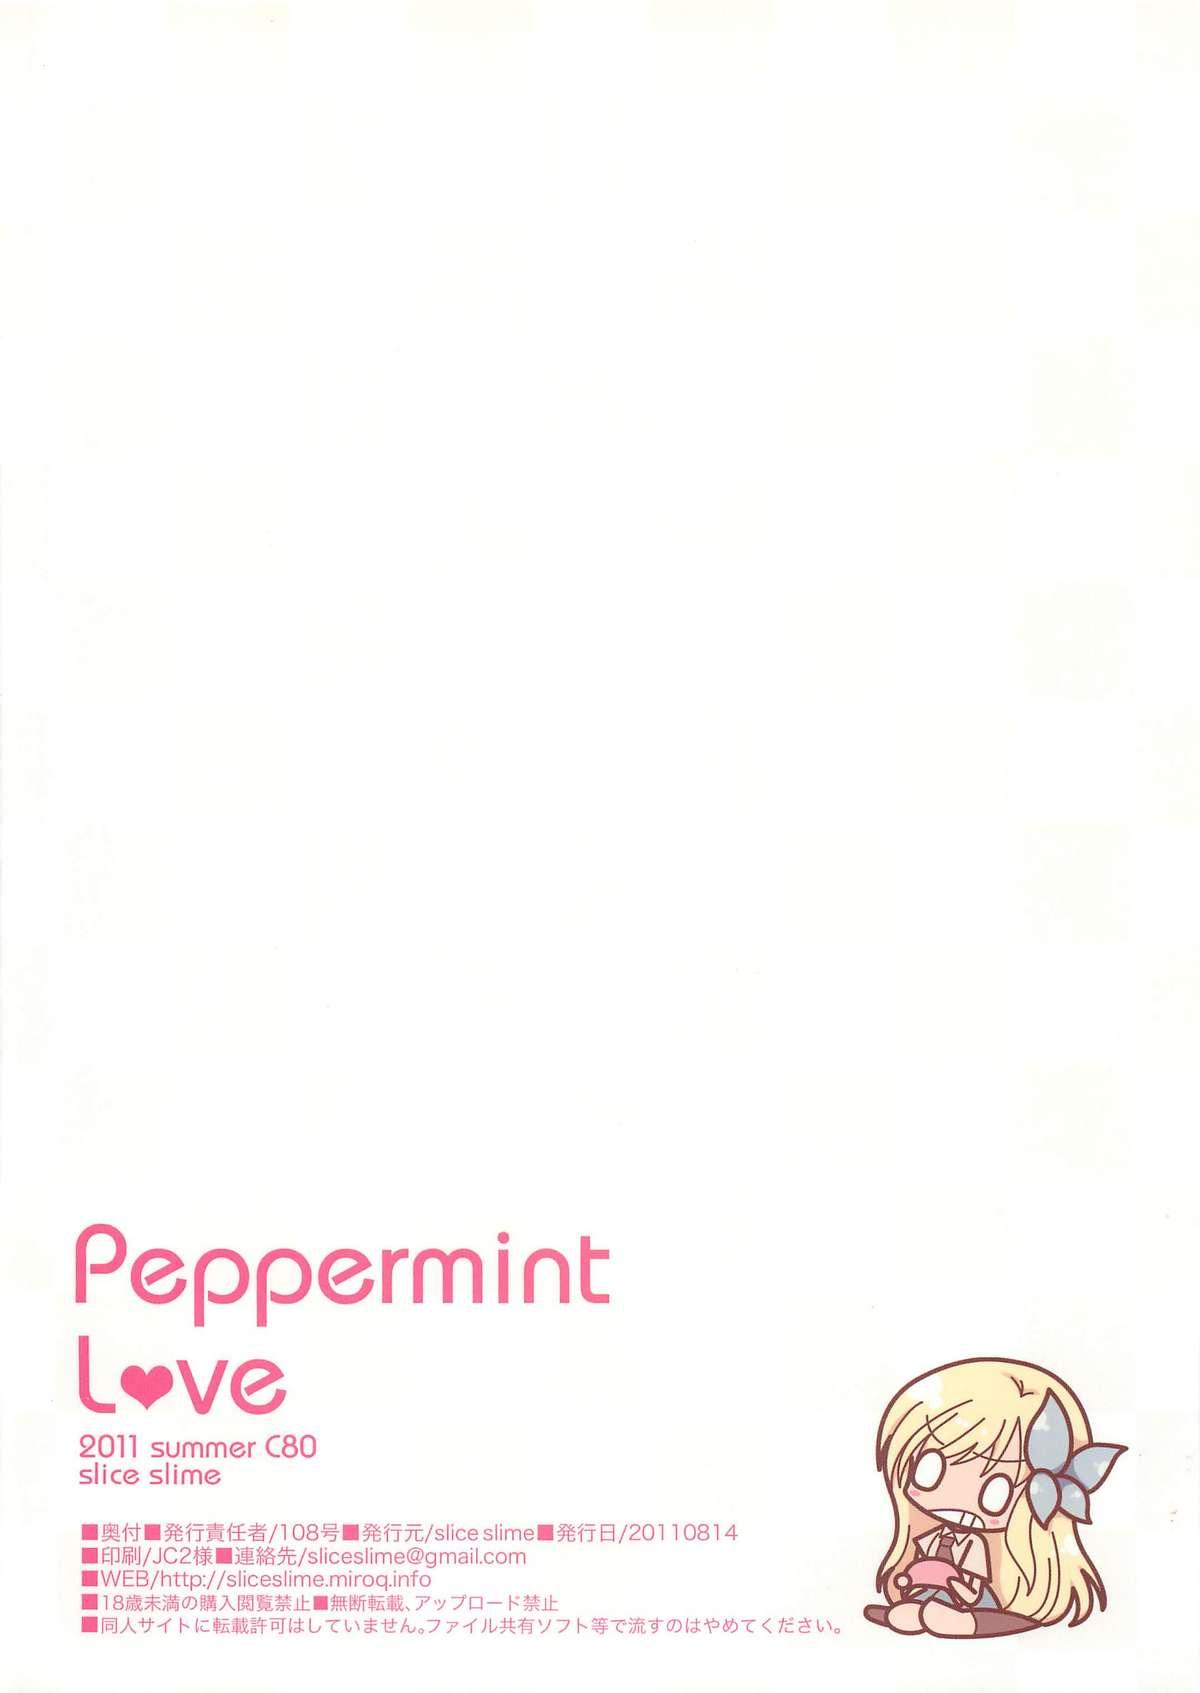 Peppermint love 13